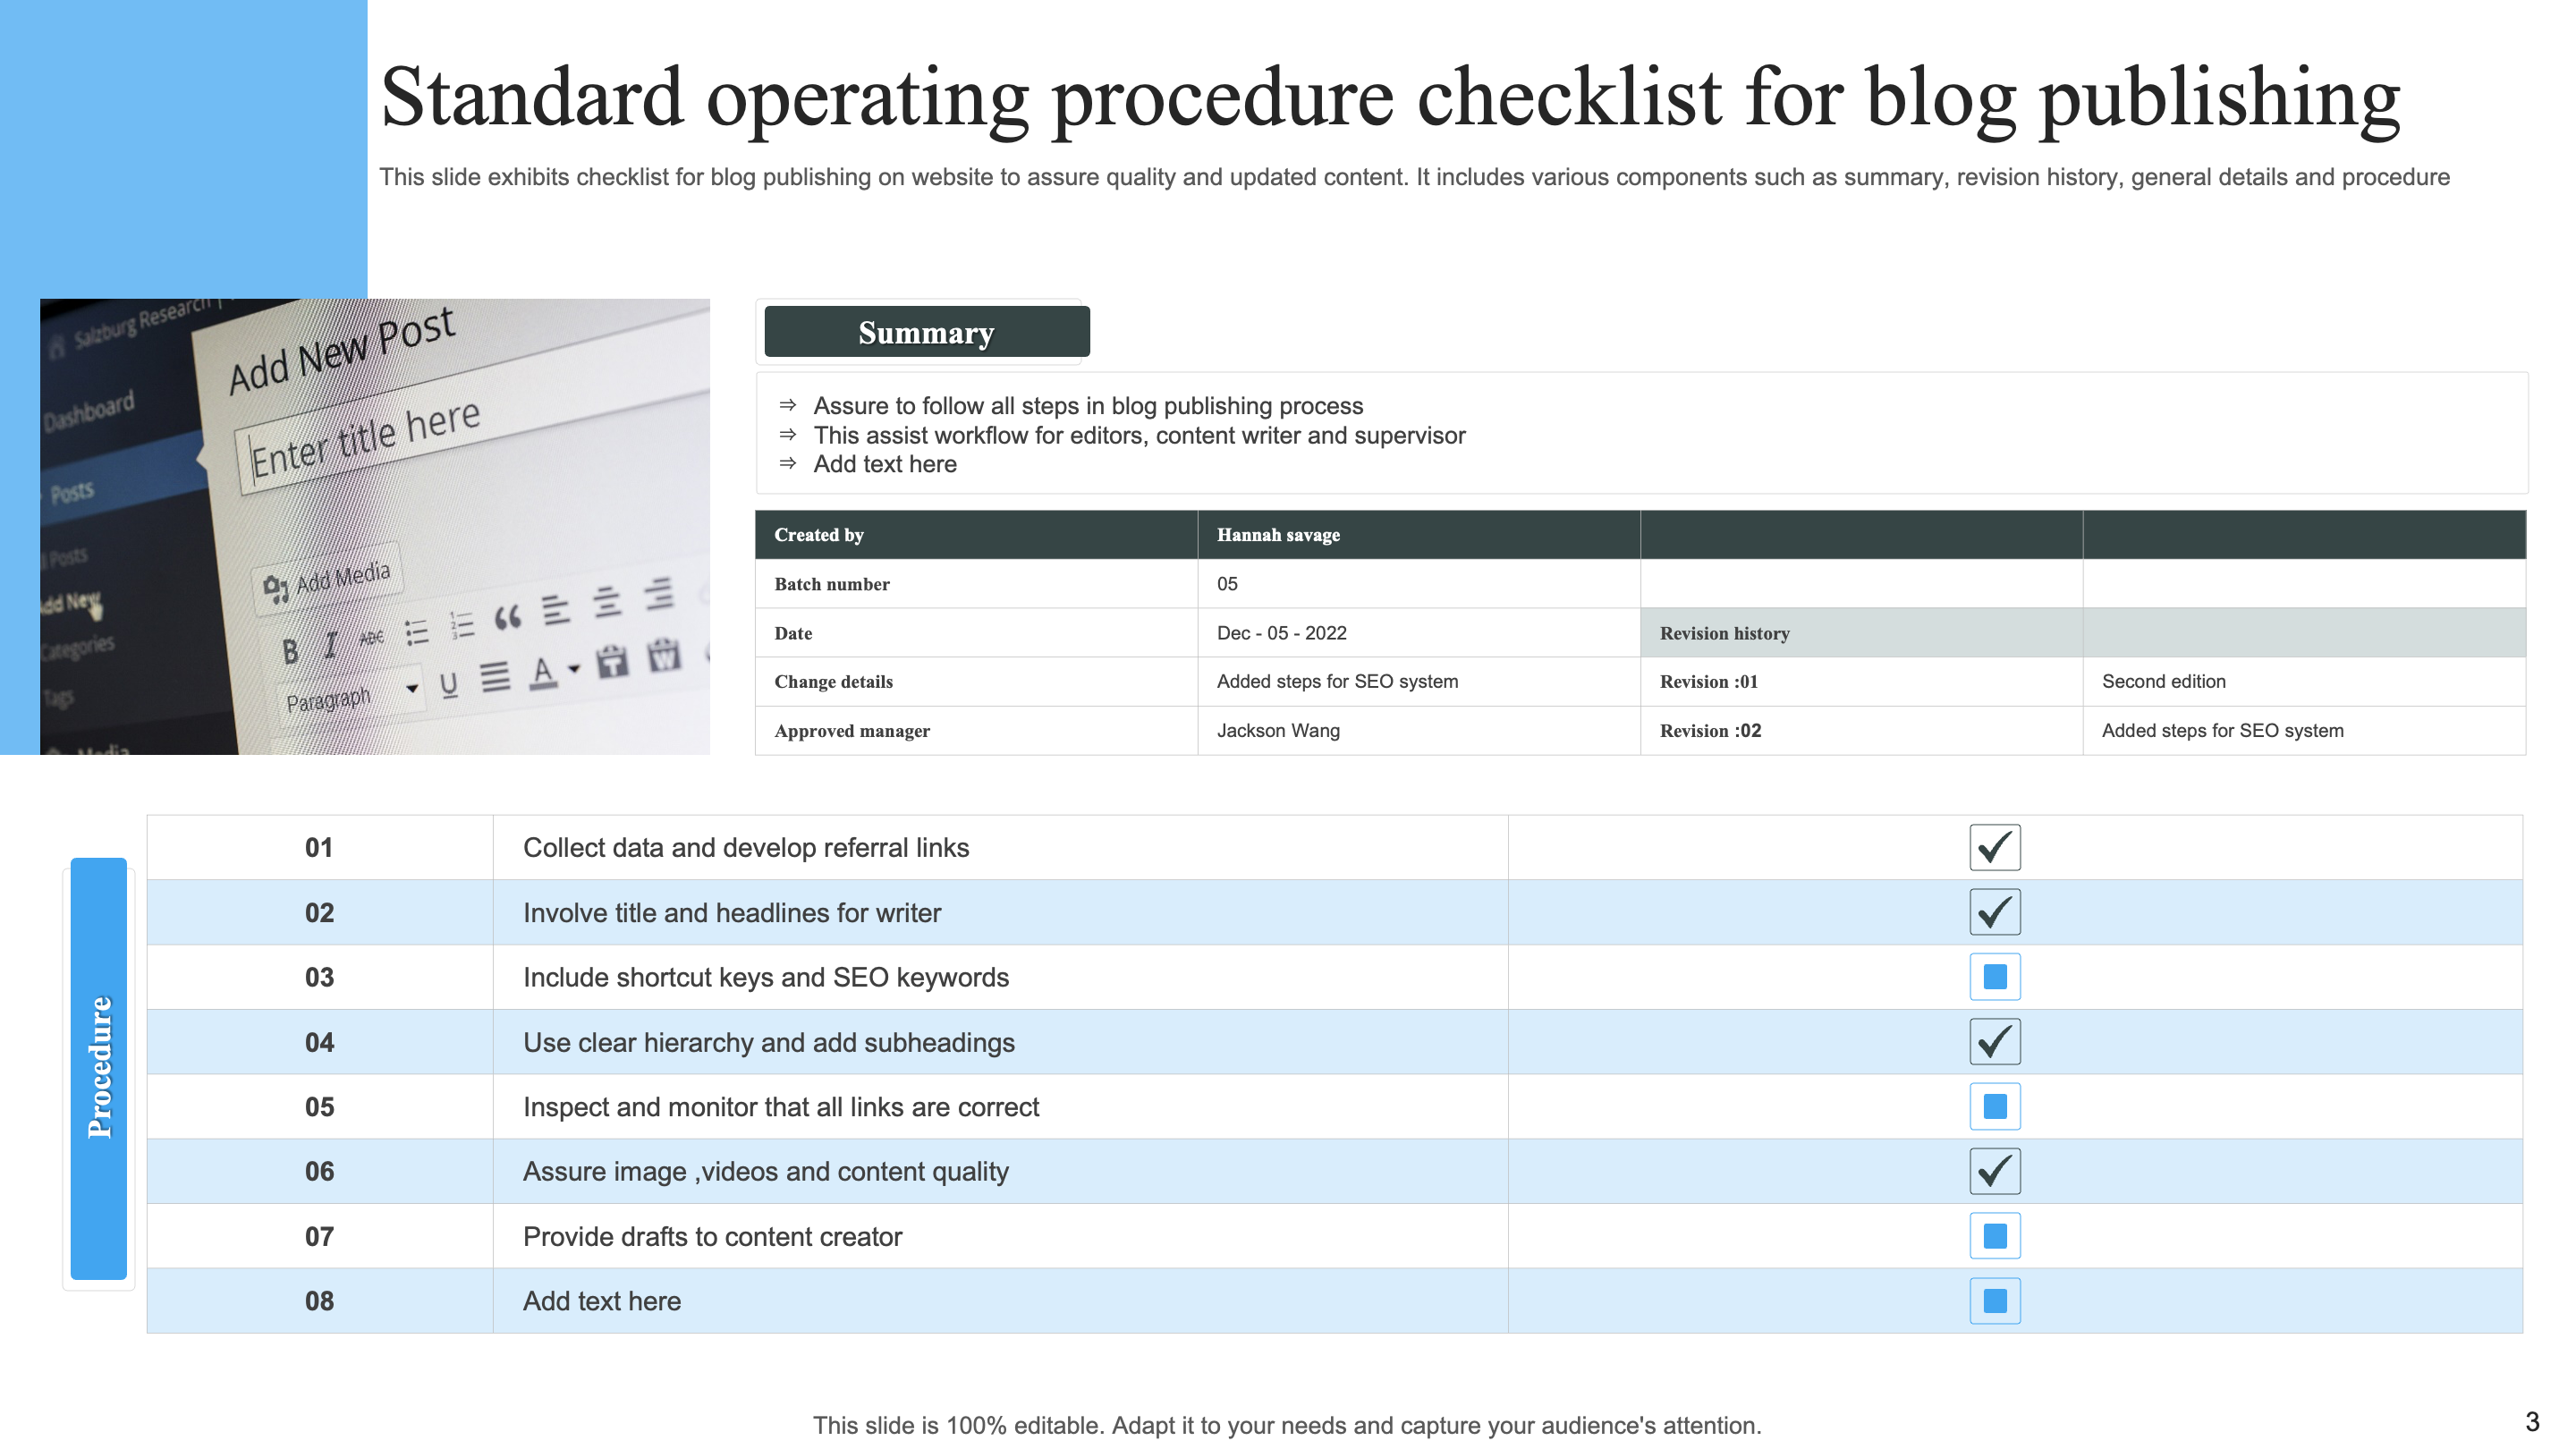 SOP (Standard Operating Procedure) Checklist for Blog Publishing